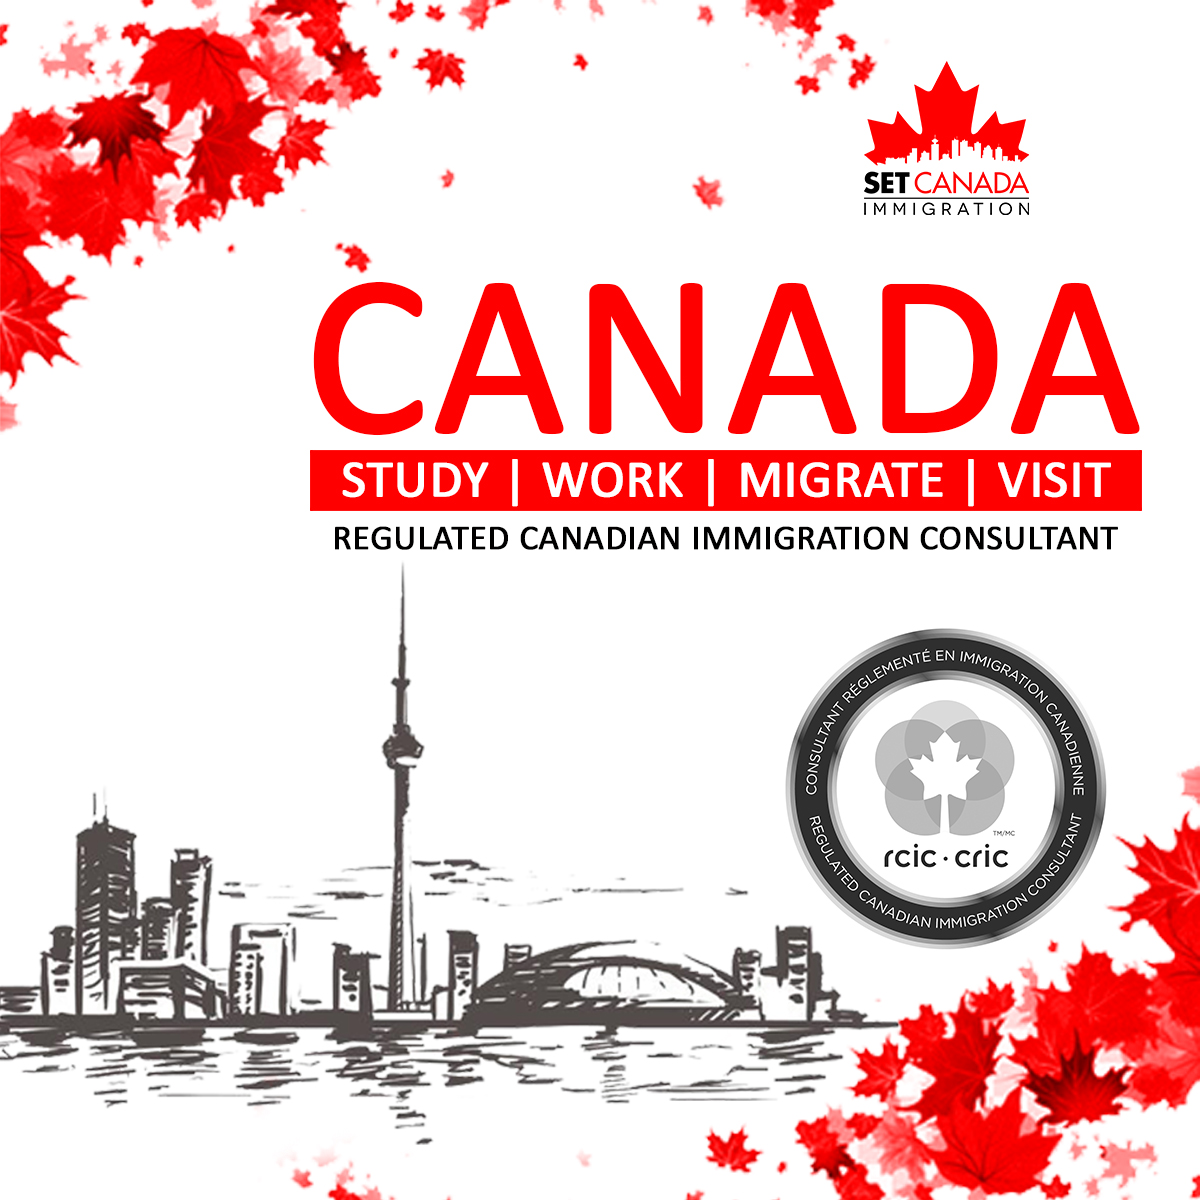 Set-Canada-Immigration-Consultant-gl